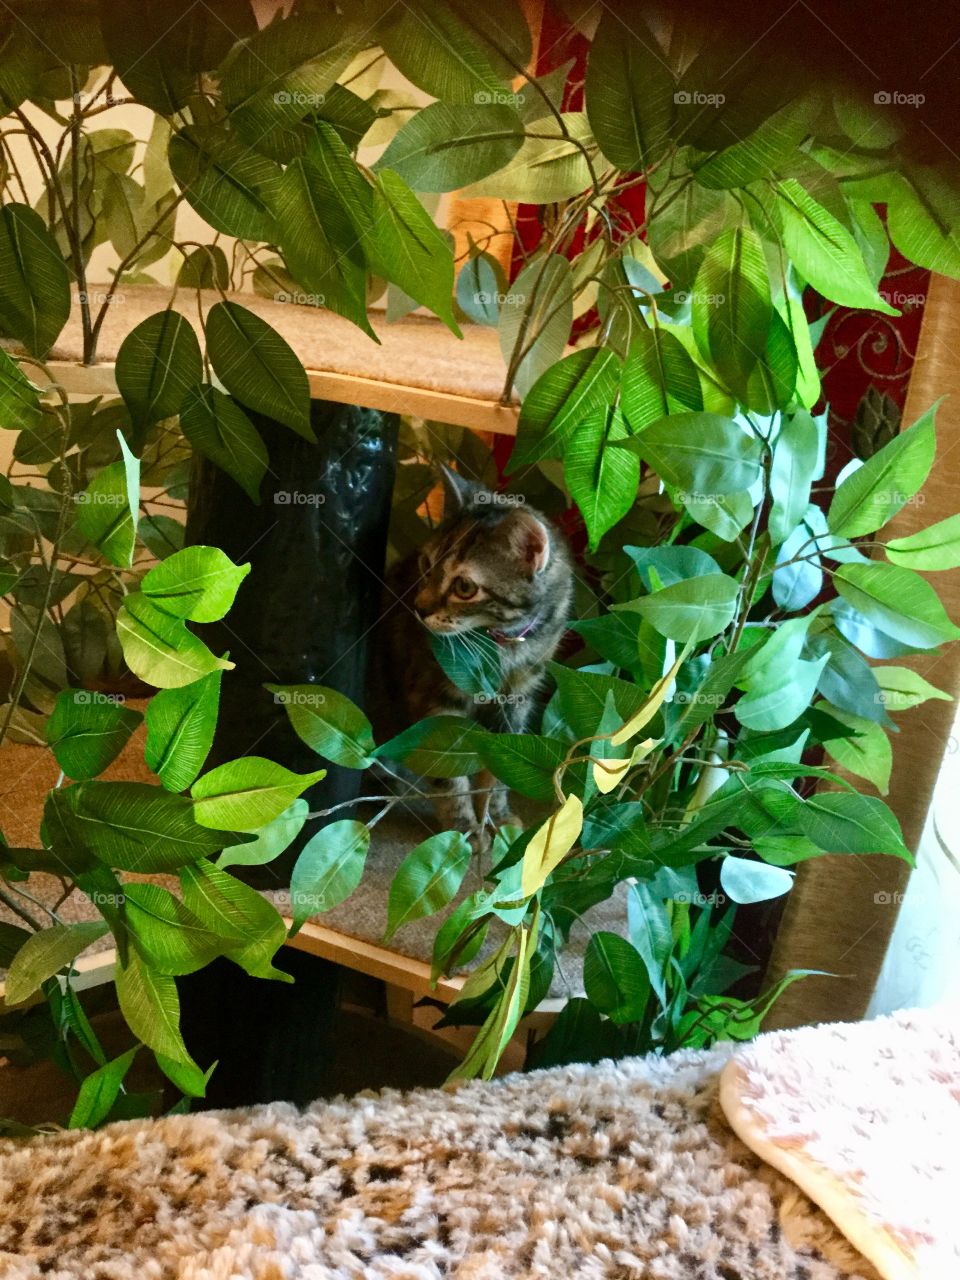 Secret hiding place for kitty 